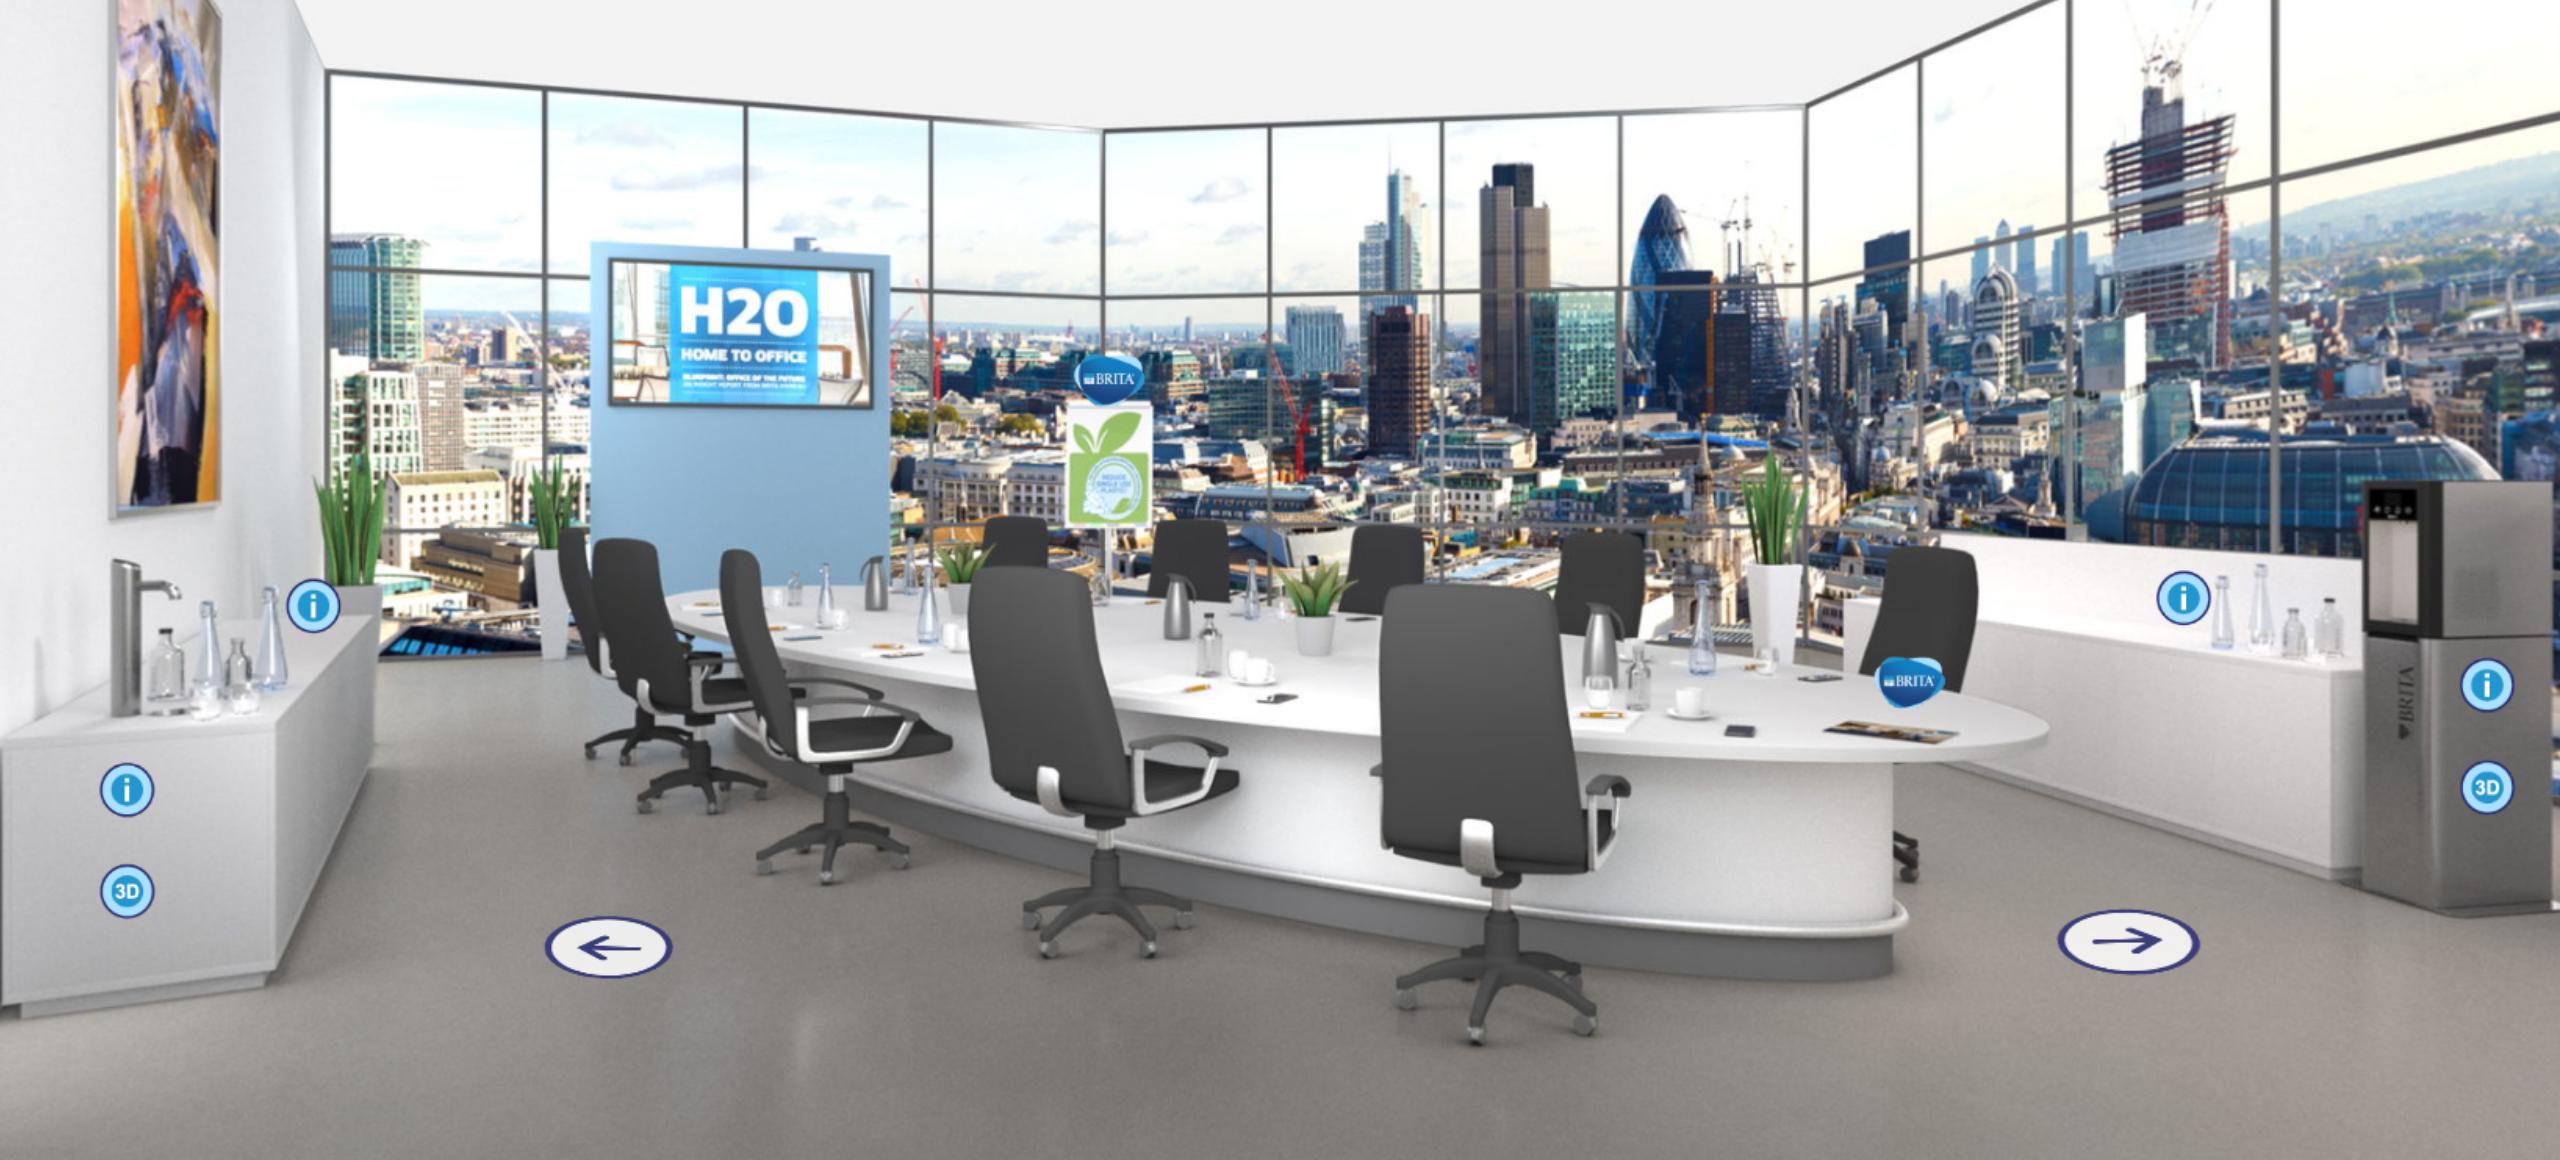 Showroom - Corporate Boardroom